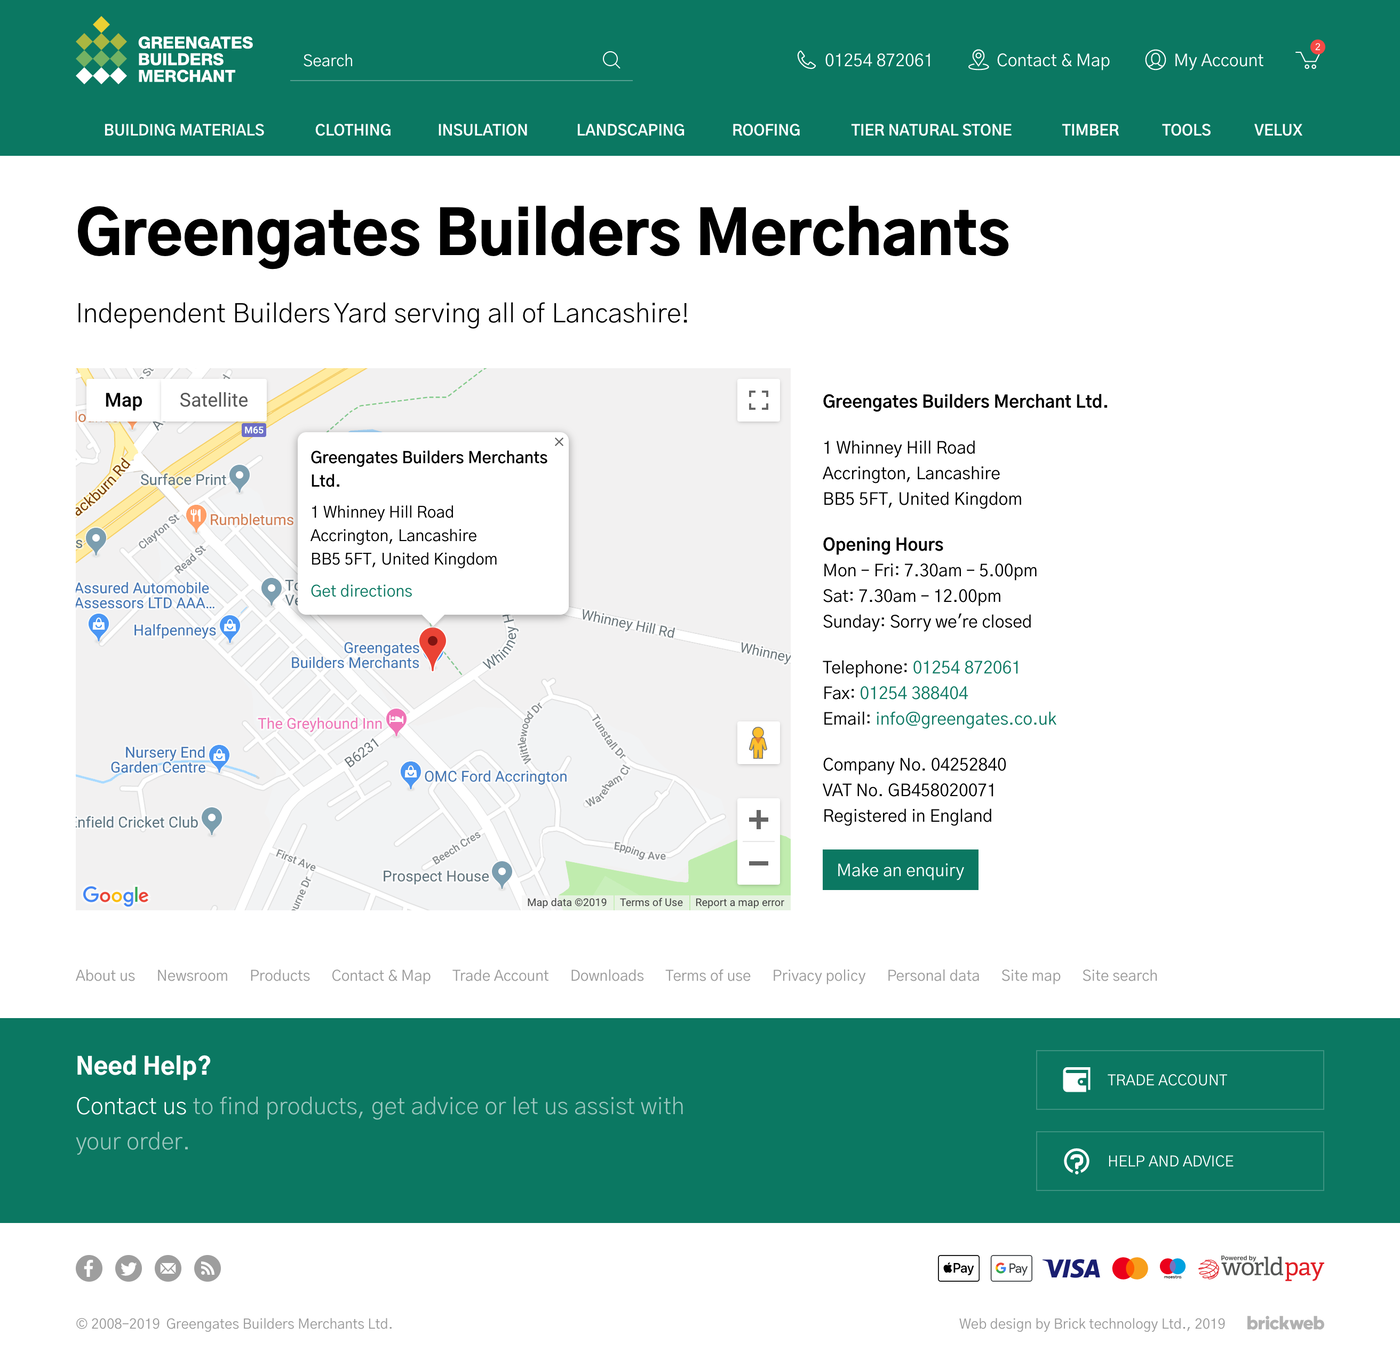 Greengates Builders Merchants (2019) Contact us